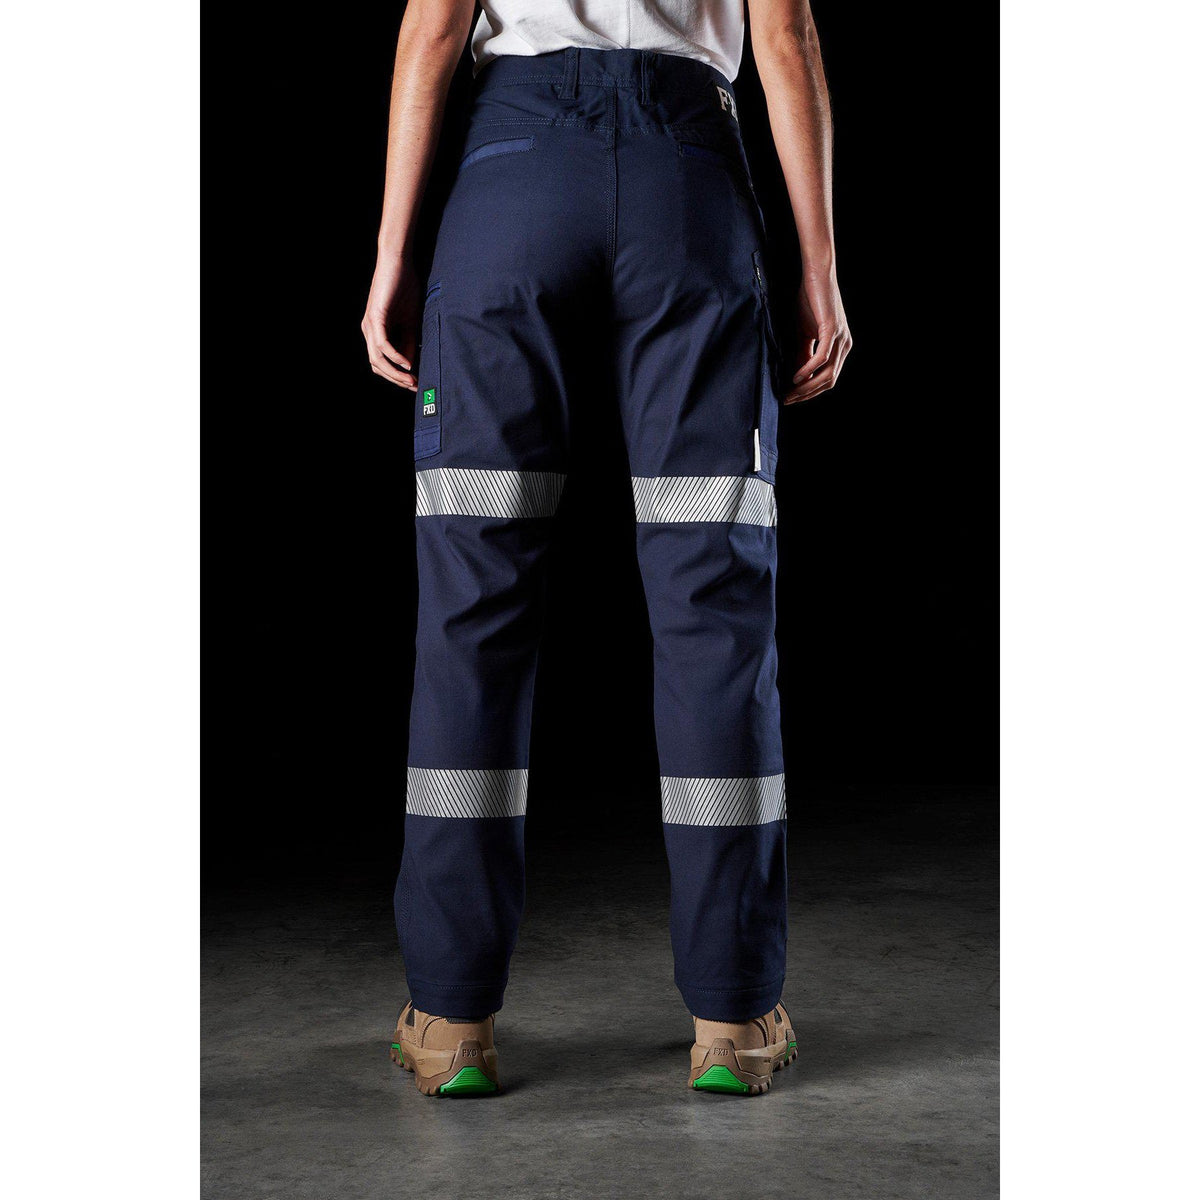 FXD WP-3WT Ladies Taped Stretch Work Pant  National Workwear — National  Workwear Australia